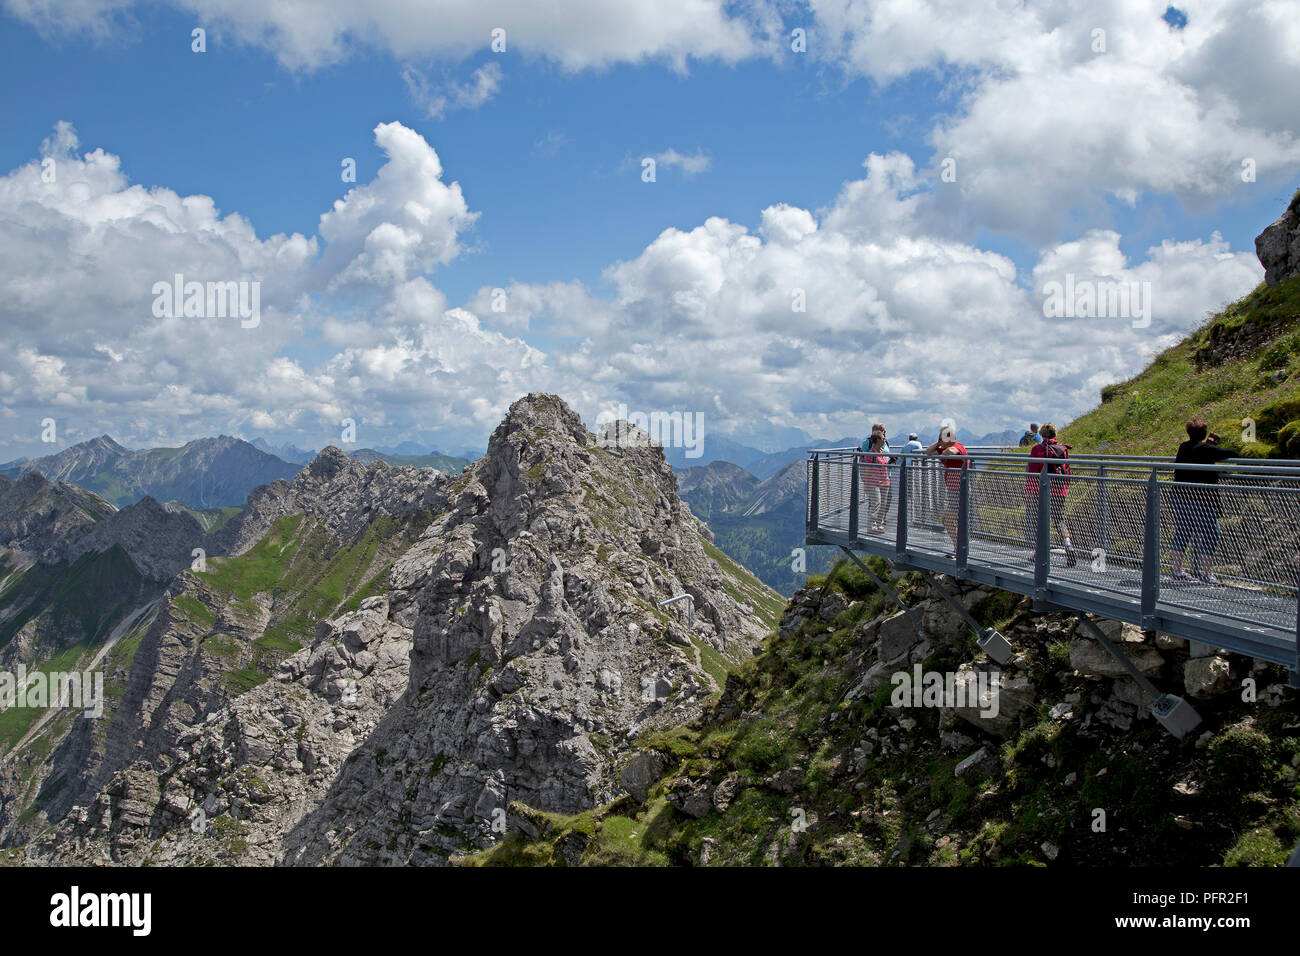 Nordwandsteig, Nebelhorn summit, Oberstdorf, Allgaeu, Bavaria, Germany  Stock Photo - Alamy